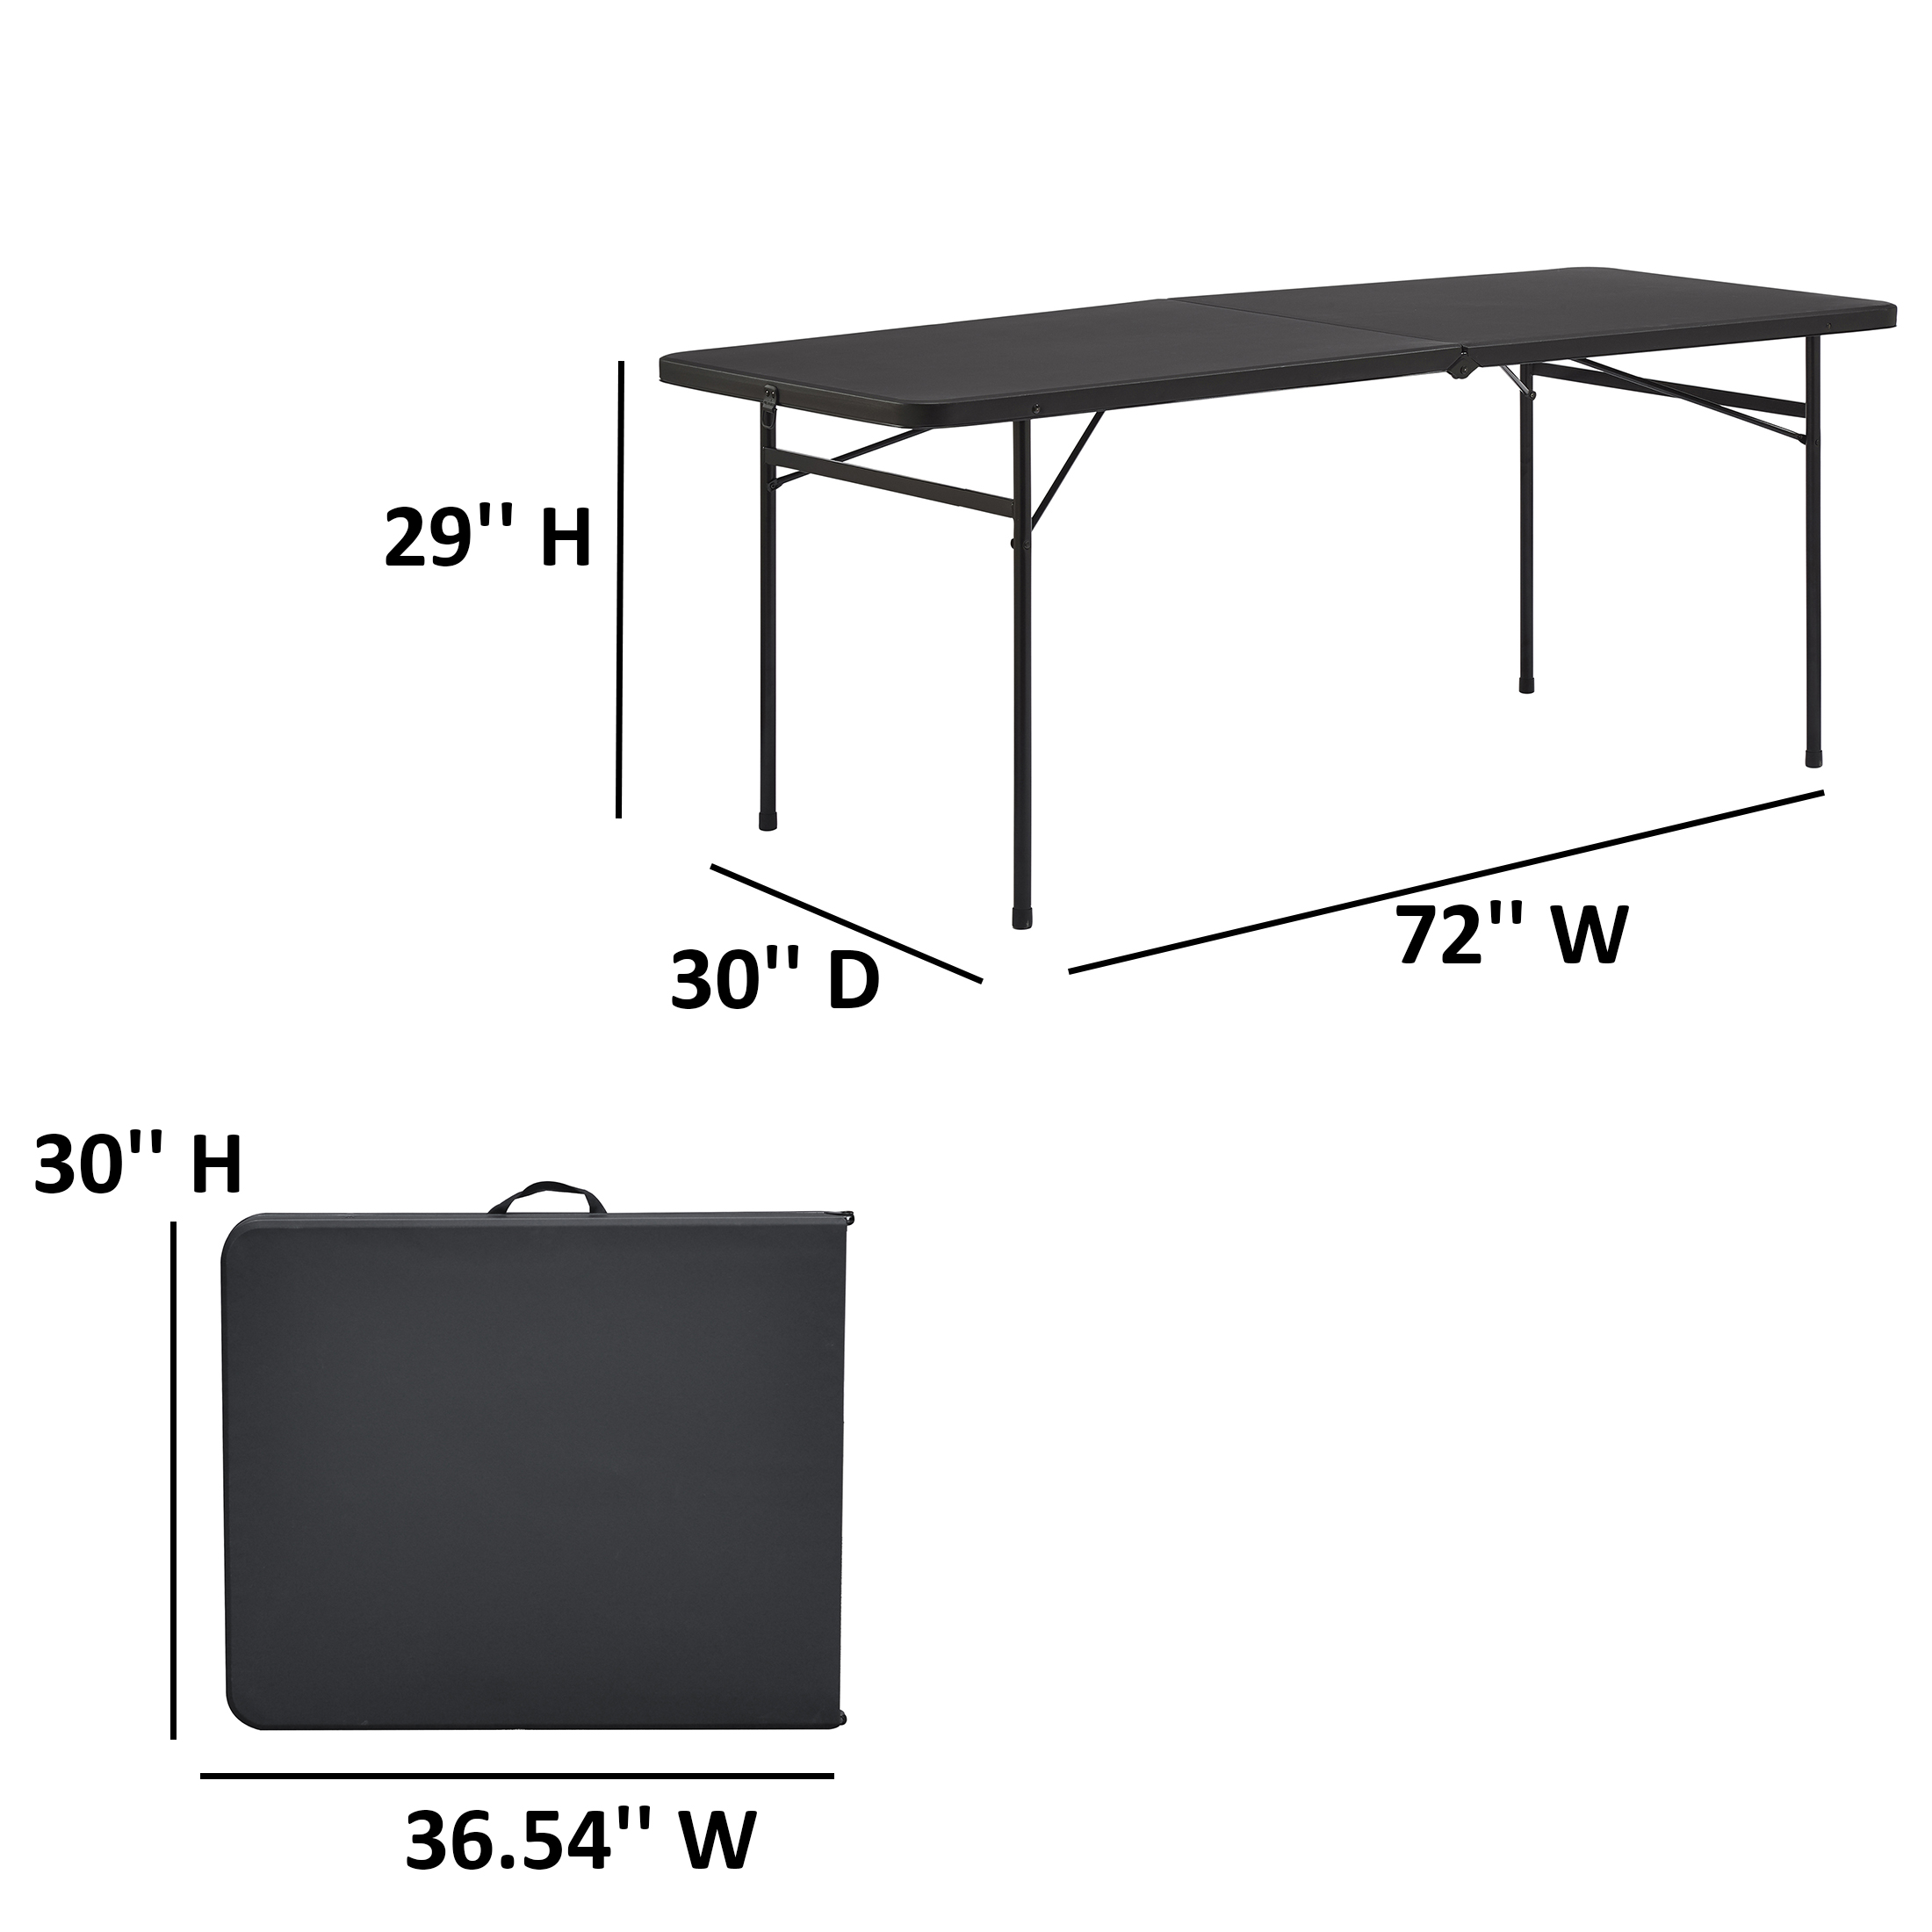 Mainstays 6 Foot Bi-Fold Plastic Folding Table, Black - image 5 of 8